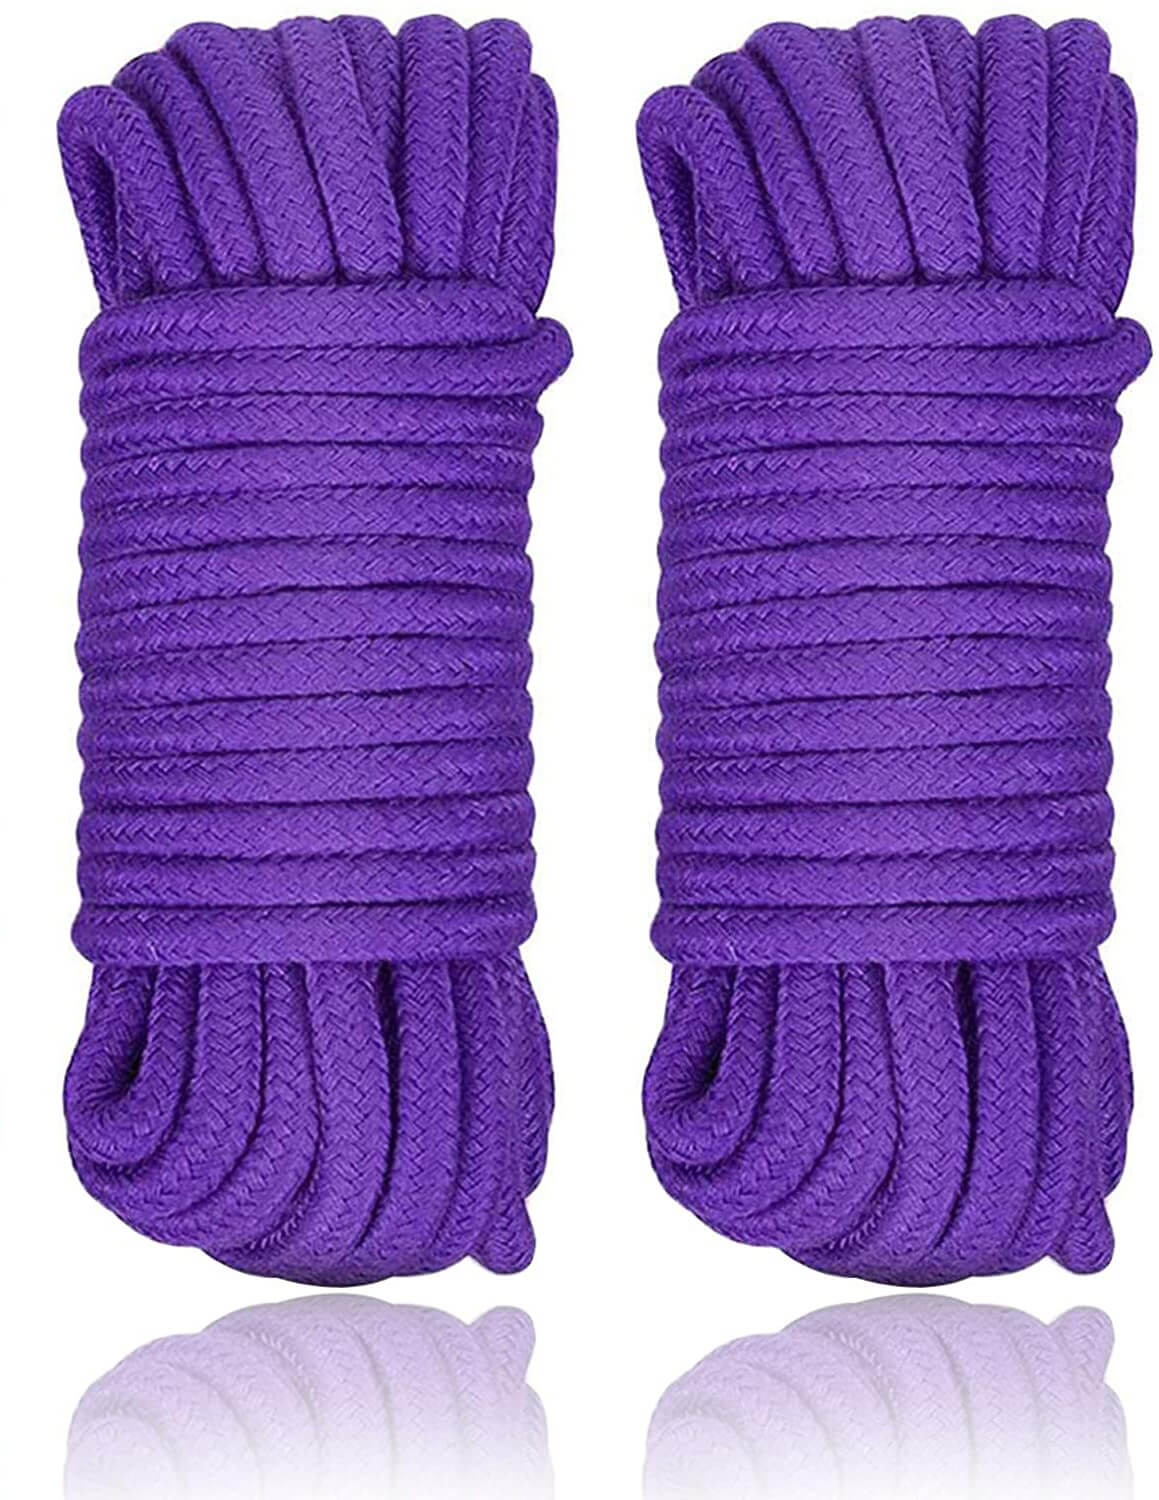 LIFETORE Soft Rope Cord,2Pack Soft Cotton Rope 10 M33 Feet 8 MM All Purpose  Cotton Rope Craft Rope,purpleblue